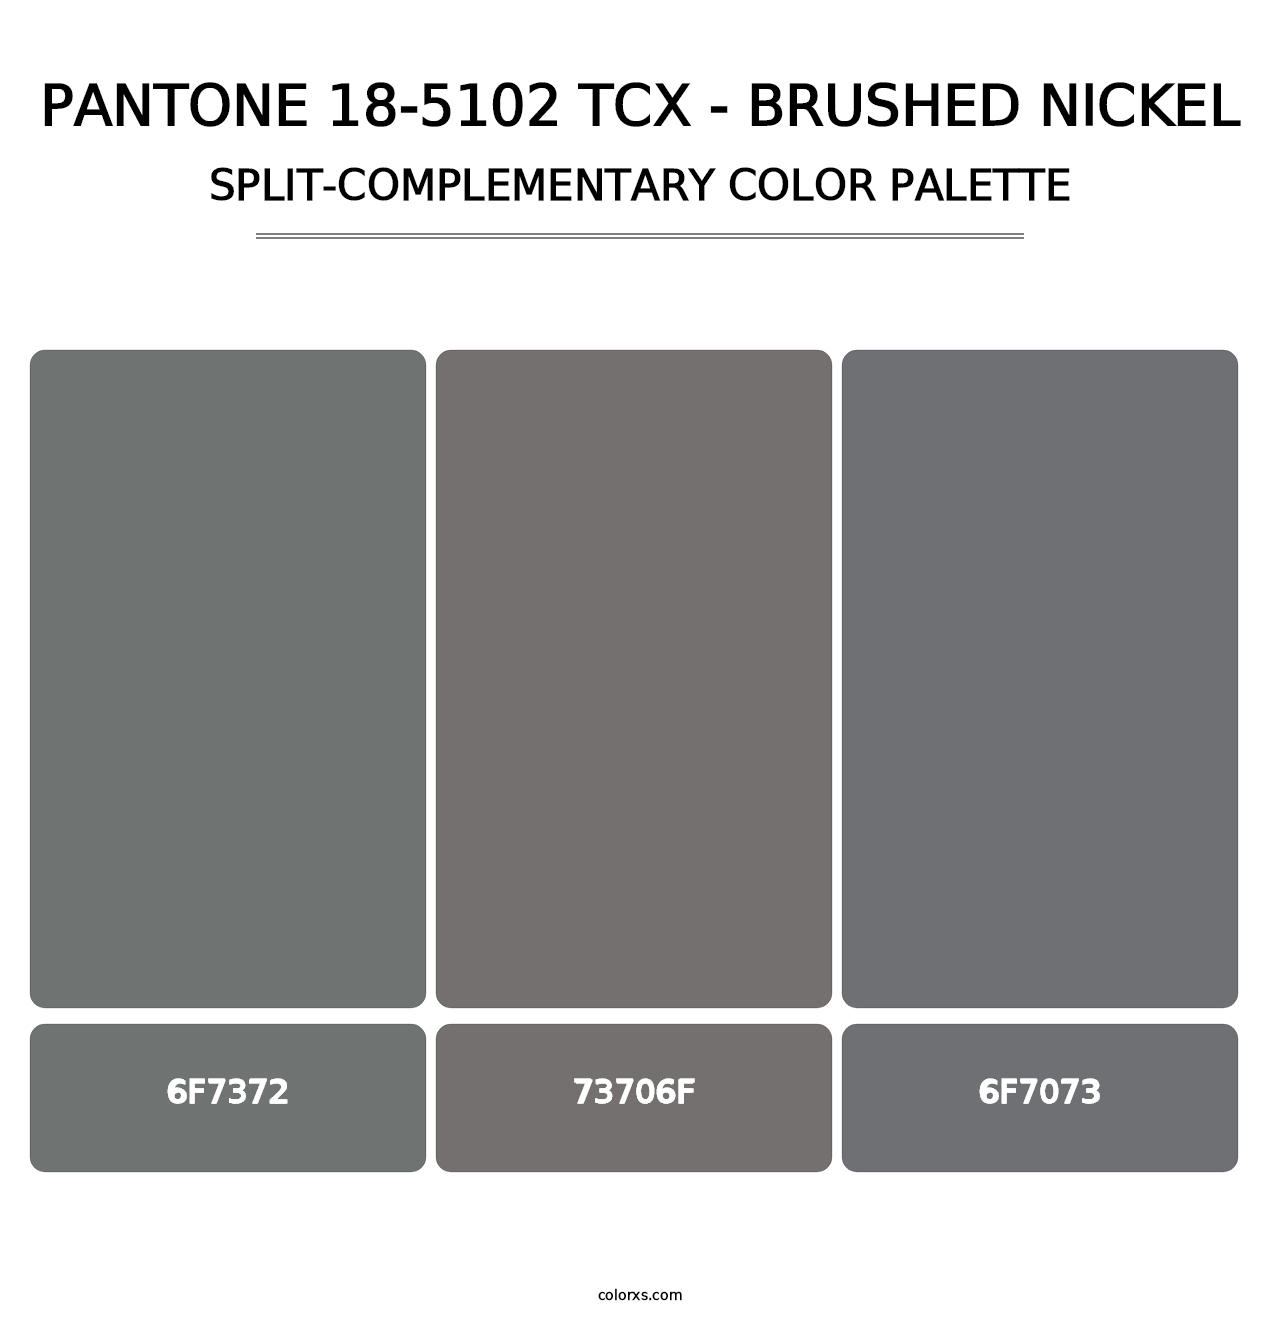 PANTONE 18-5102 TCX - Brushed Nickel - Split-Complementary Color Palette